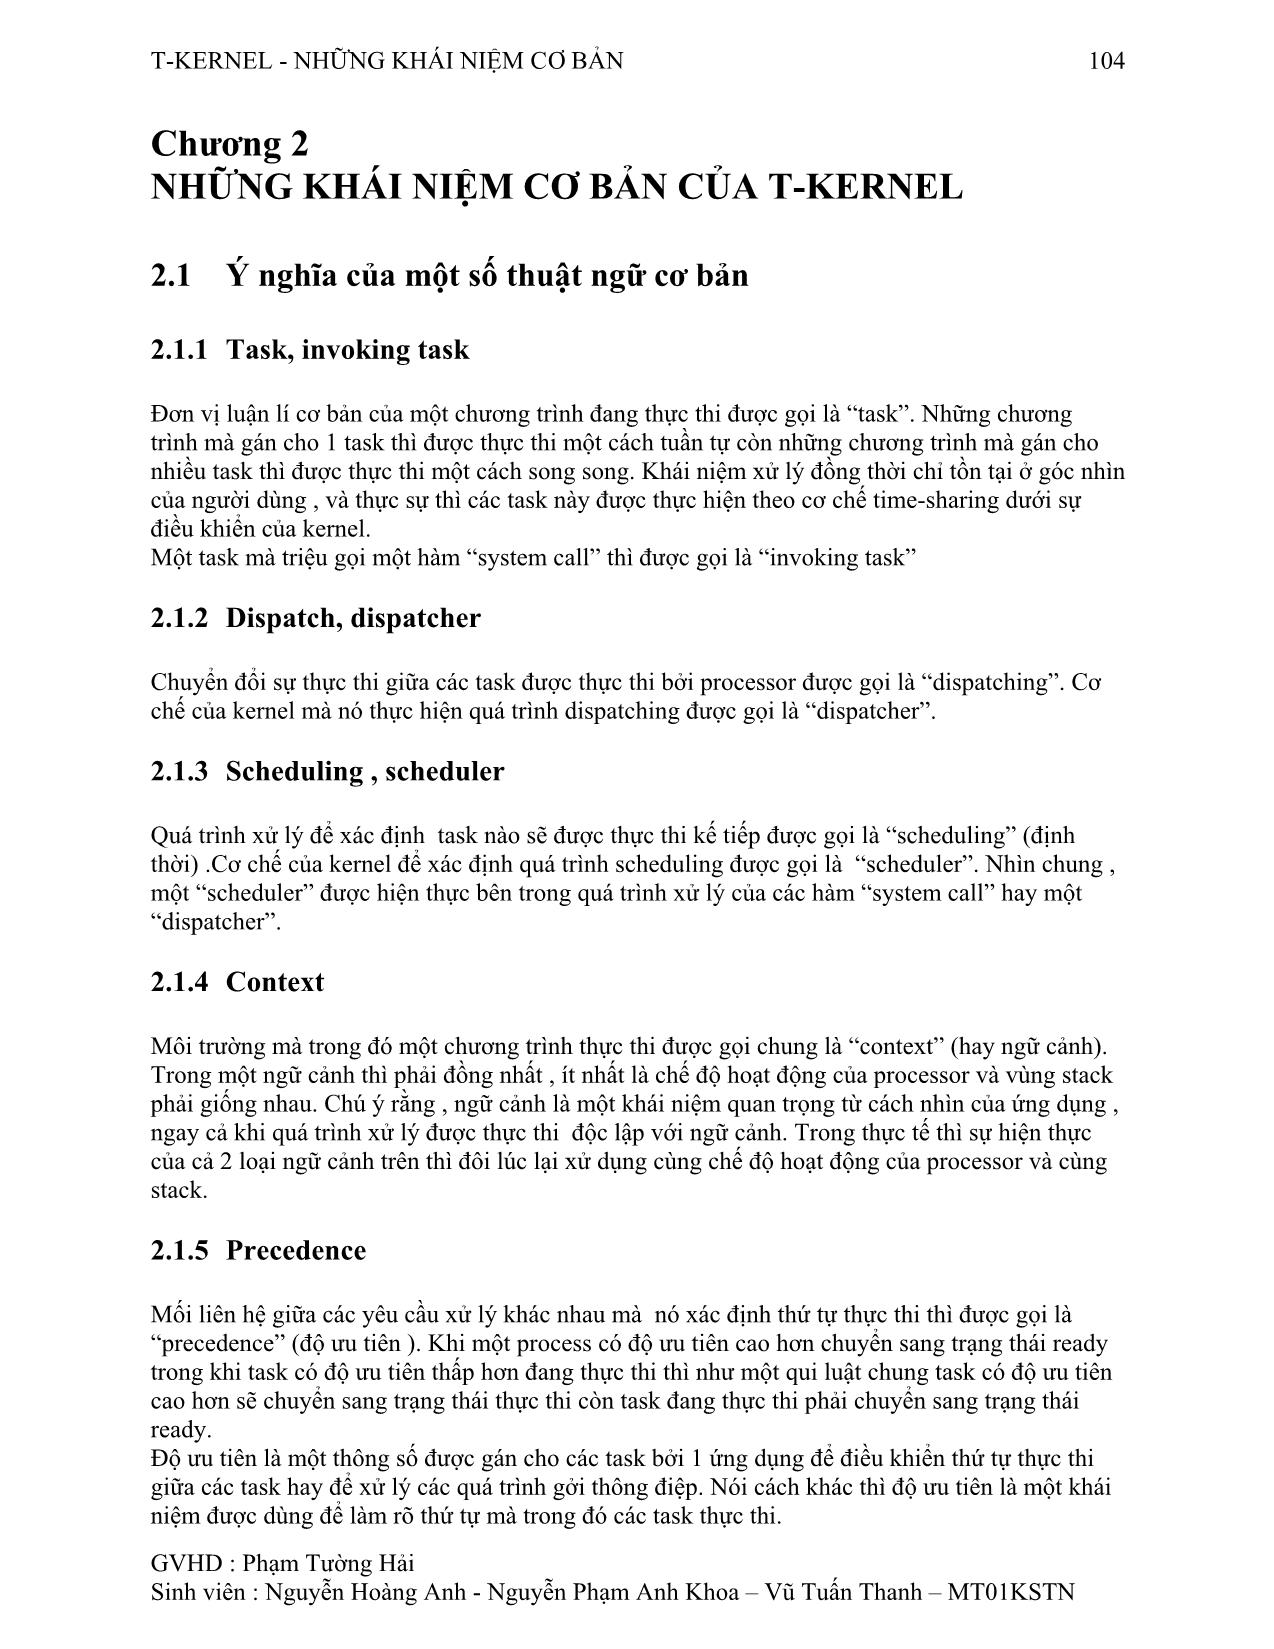 T-Kernel trang 3